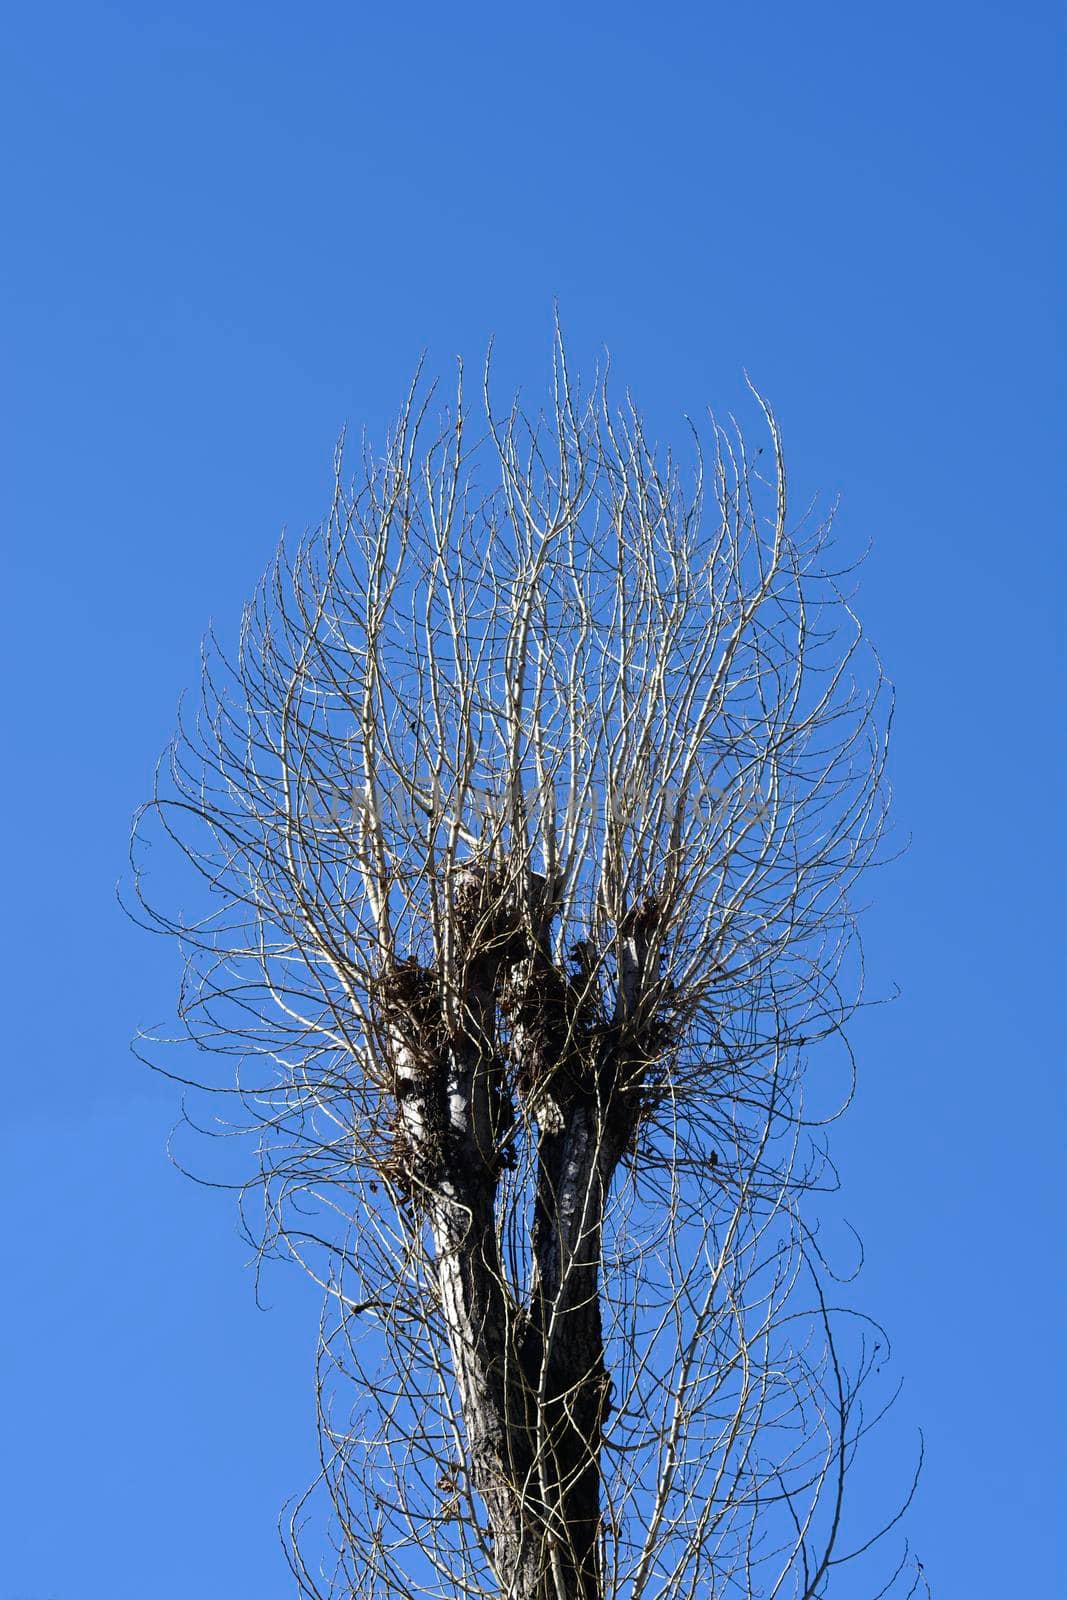 Lombardy poplar bare branches against blue sky - Latin name - Populus nigra var. italica